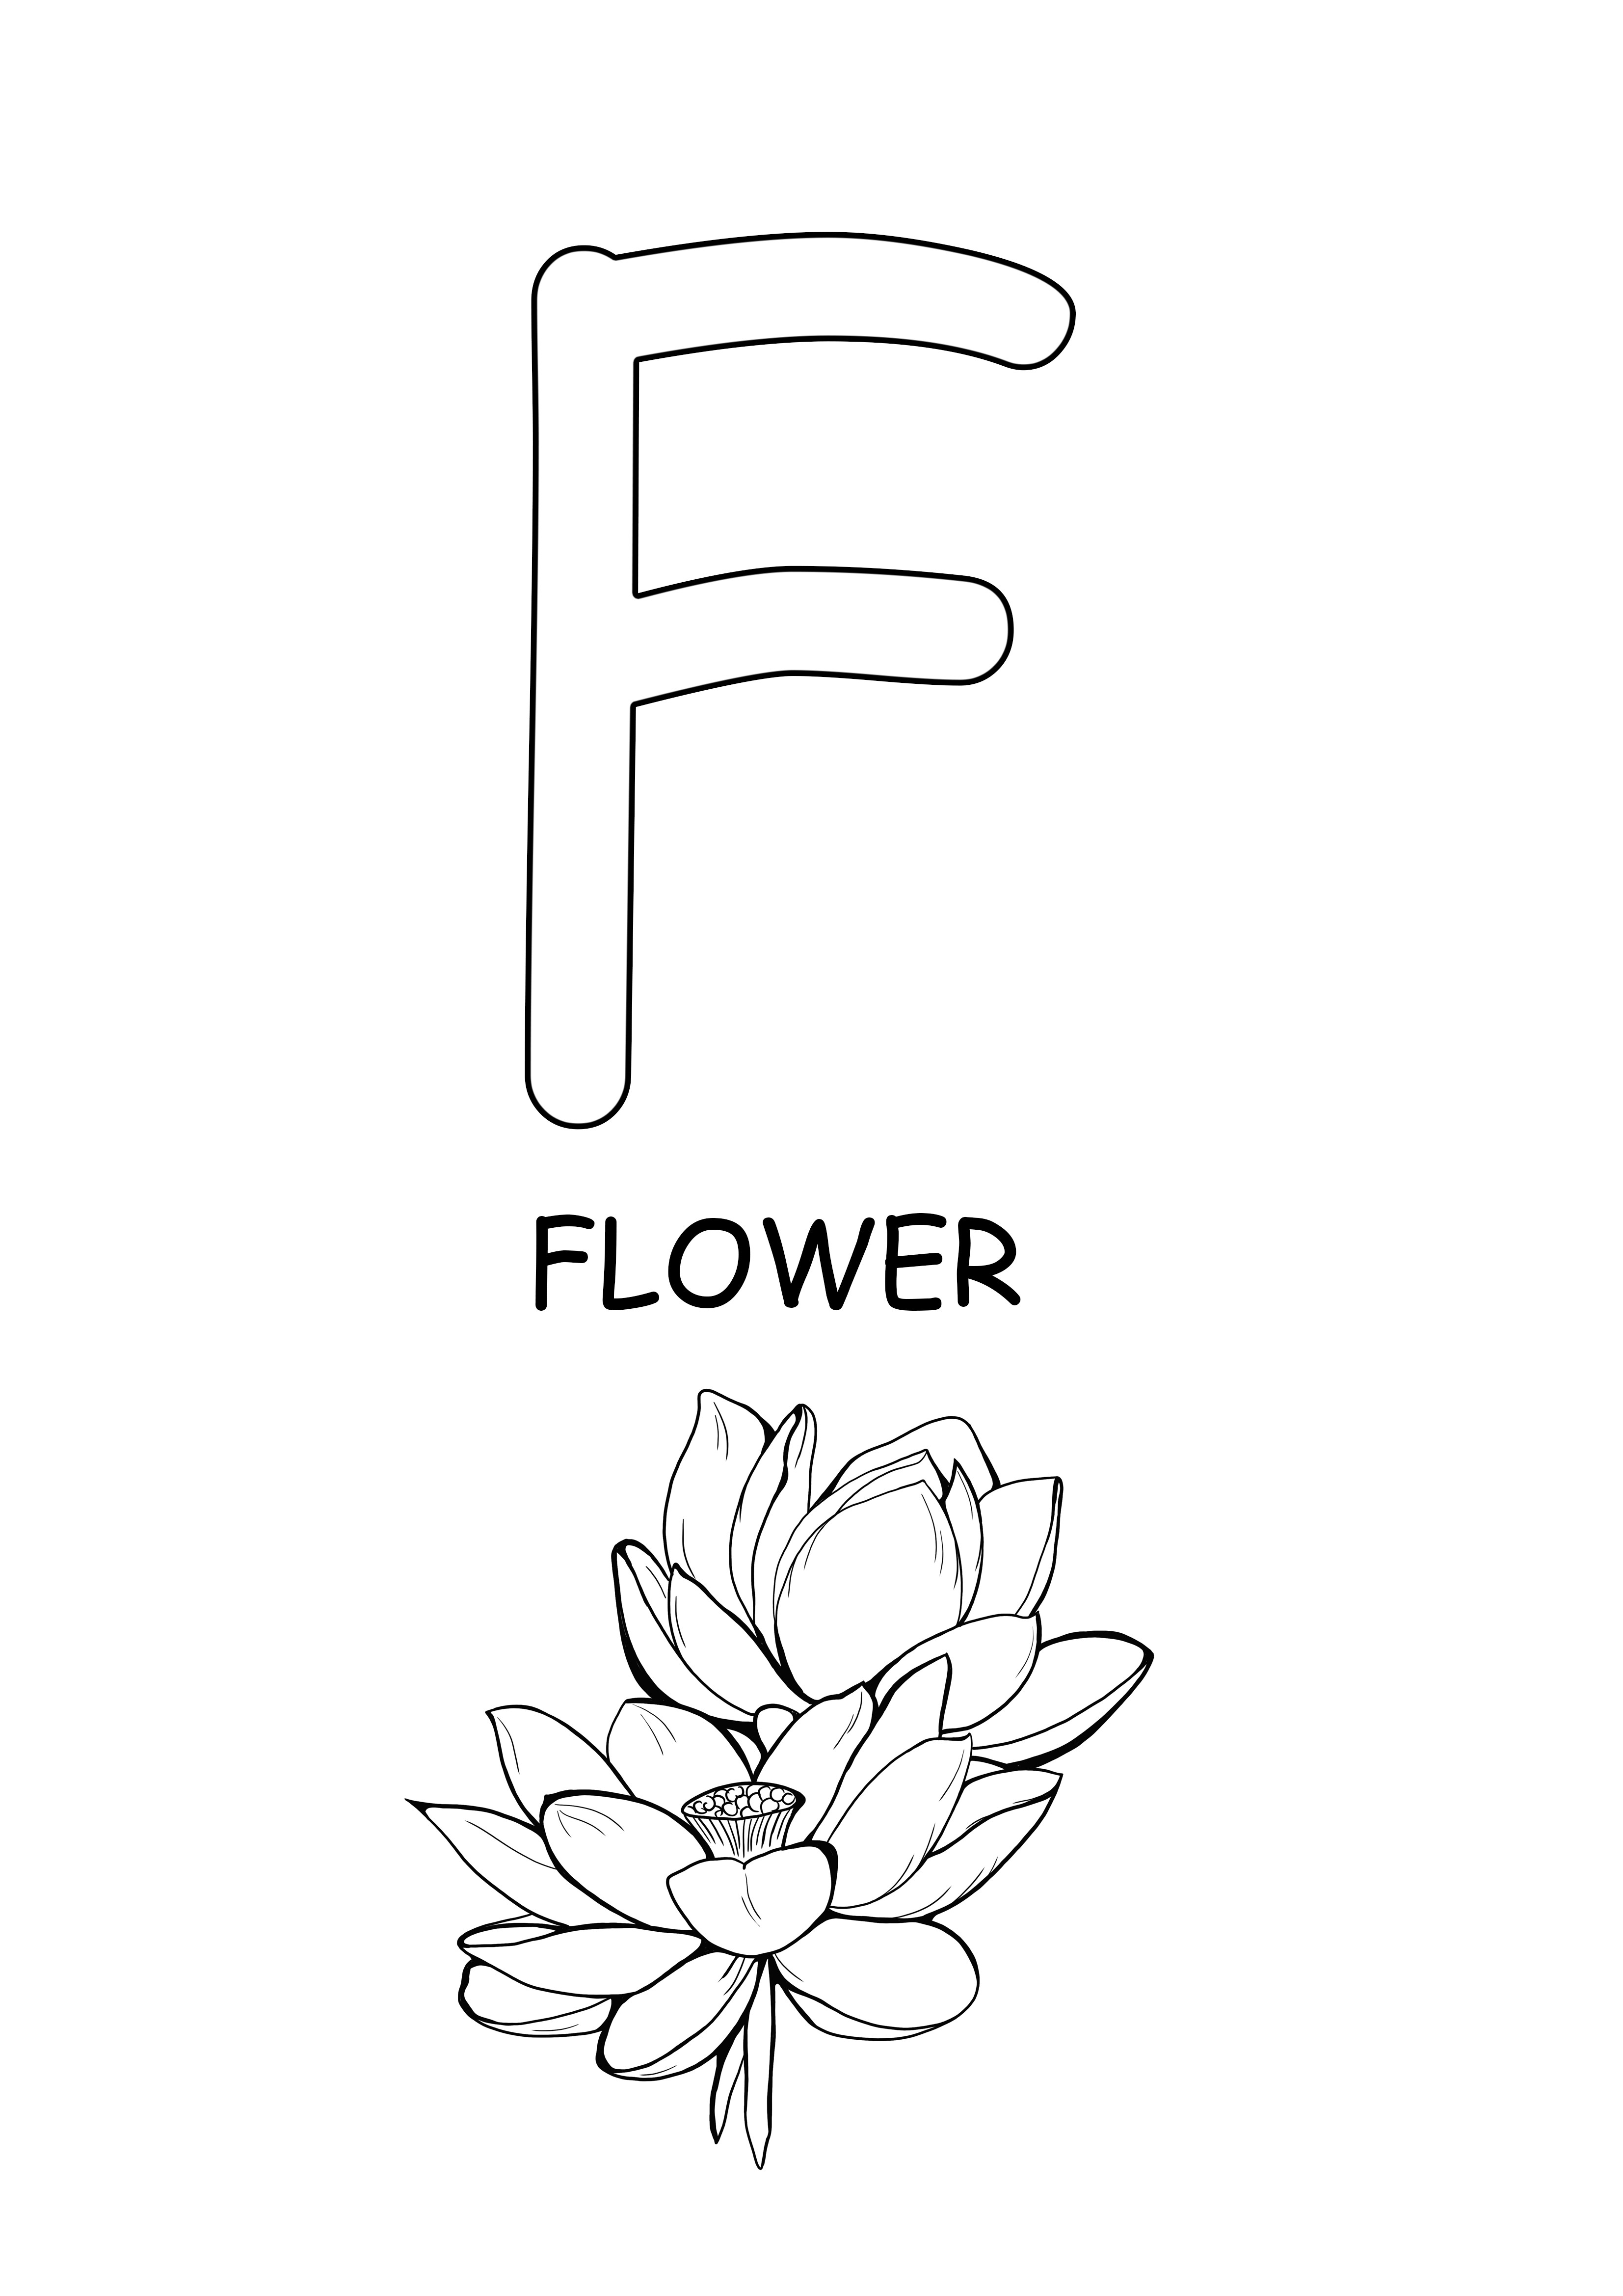 palabra-flor en mayusculas para colorear e imprimir gratis word